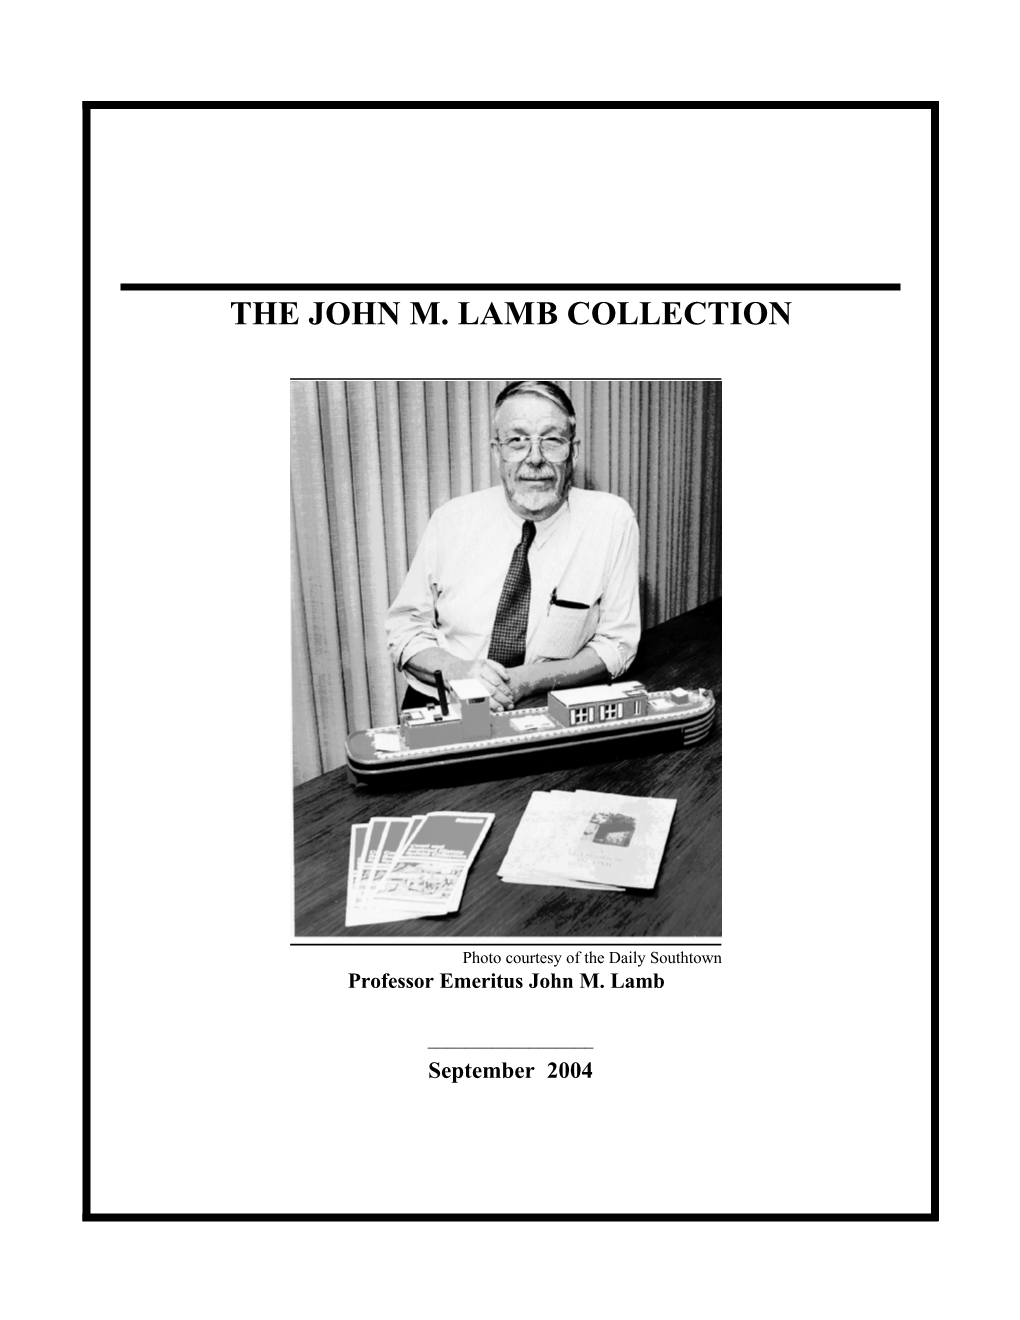 The John M. Lamb Collection